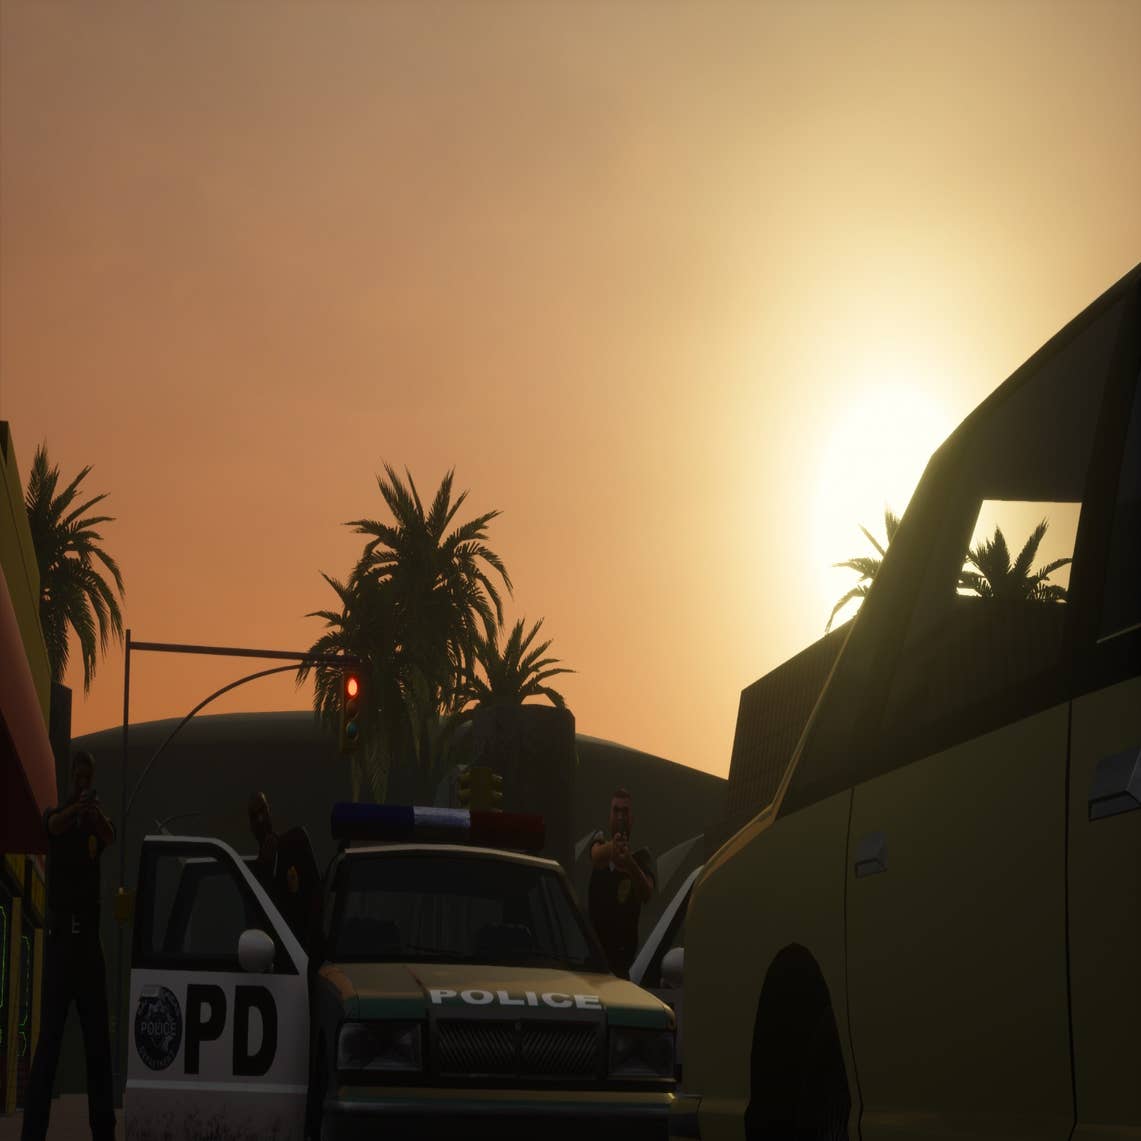 All GTA San Andreas Cheats For PC, Xbox and Playstation